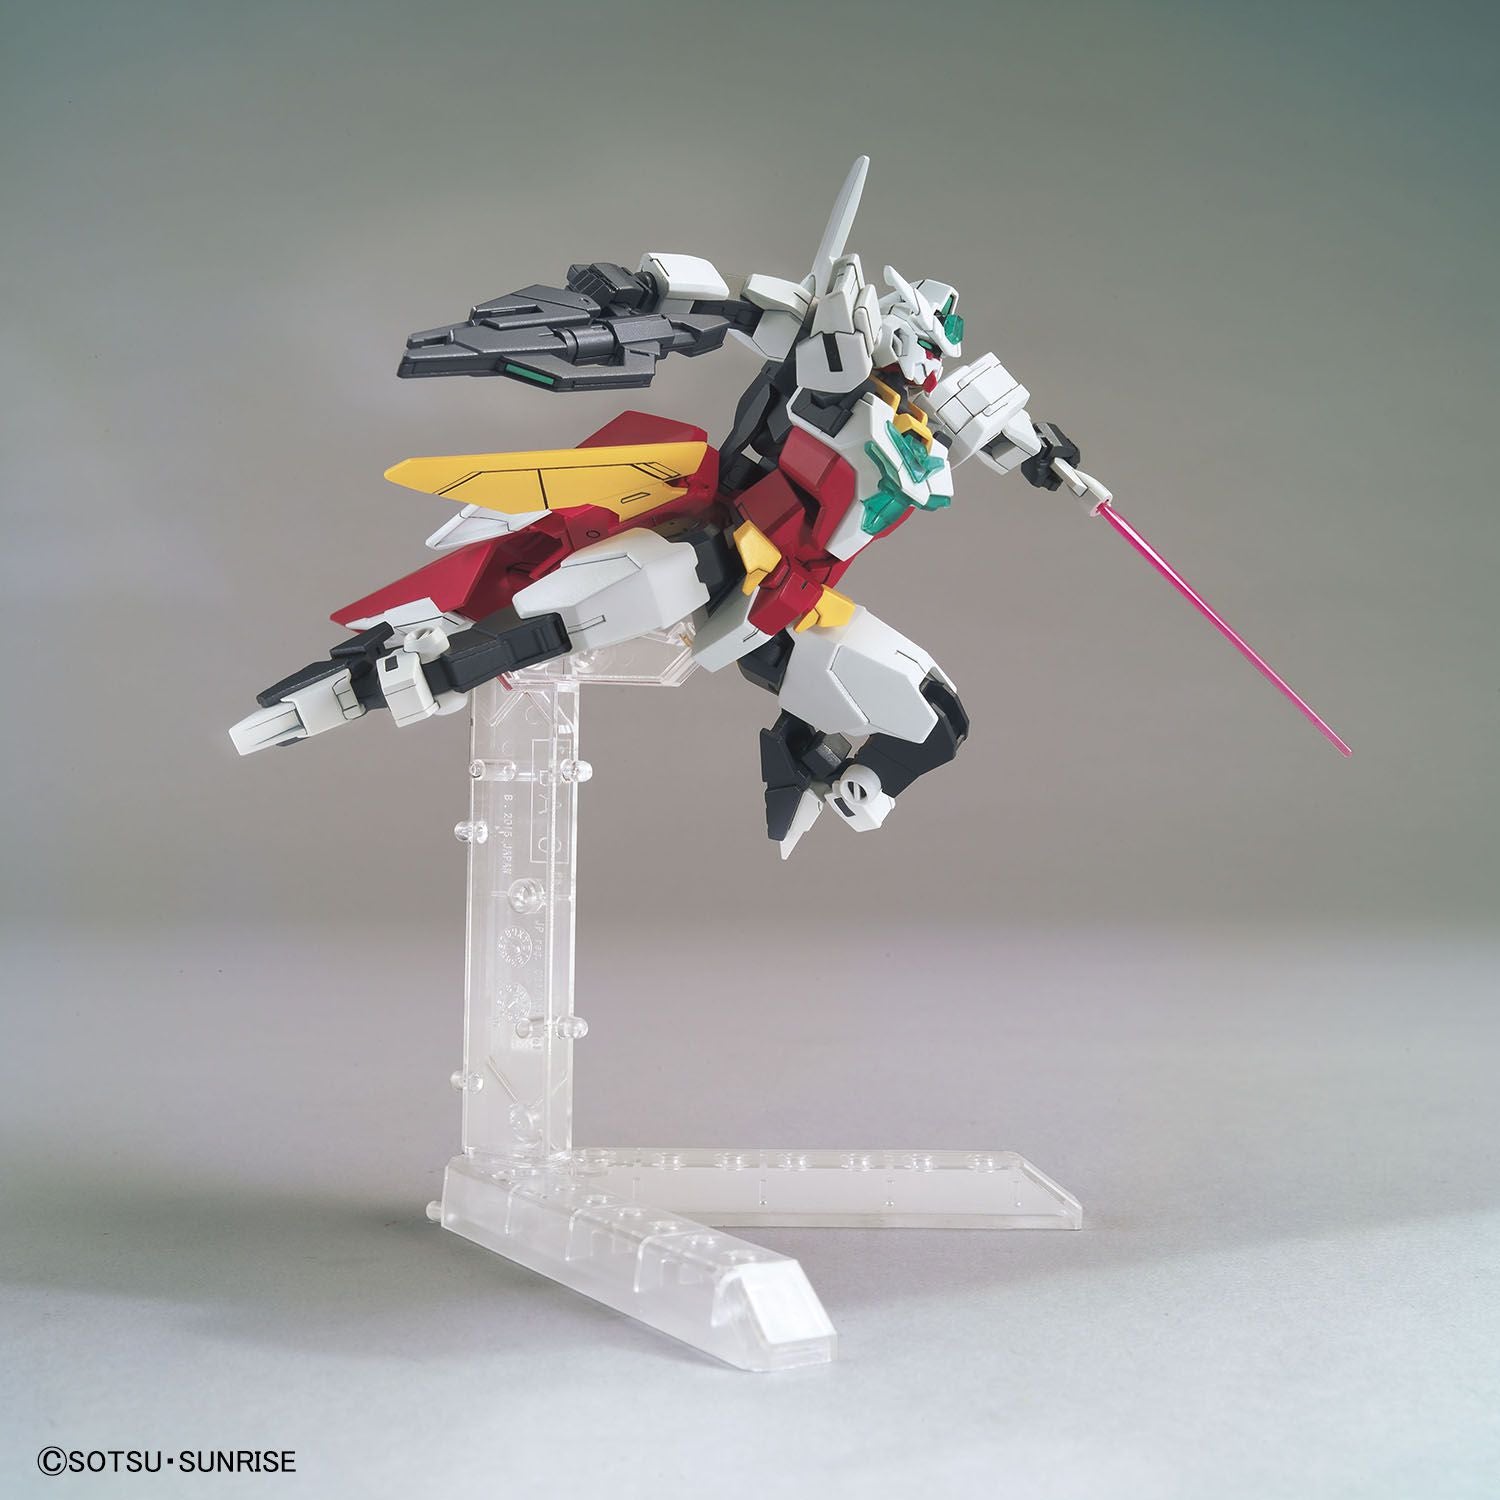 HGBD:R 1/144 Uraven Gundam - High Grade Gundam Build Divers Re:RISE | Glacier Hobbies